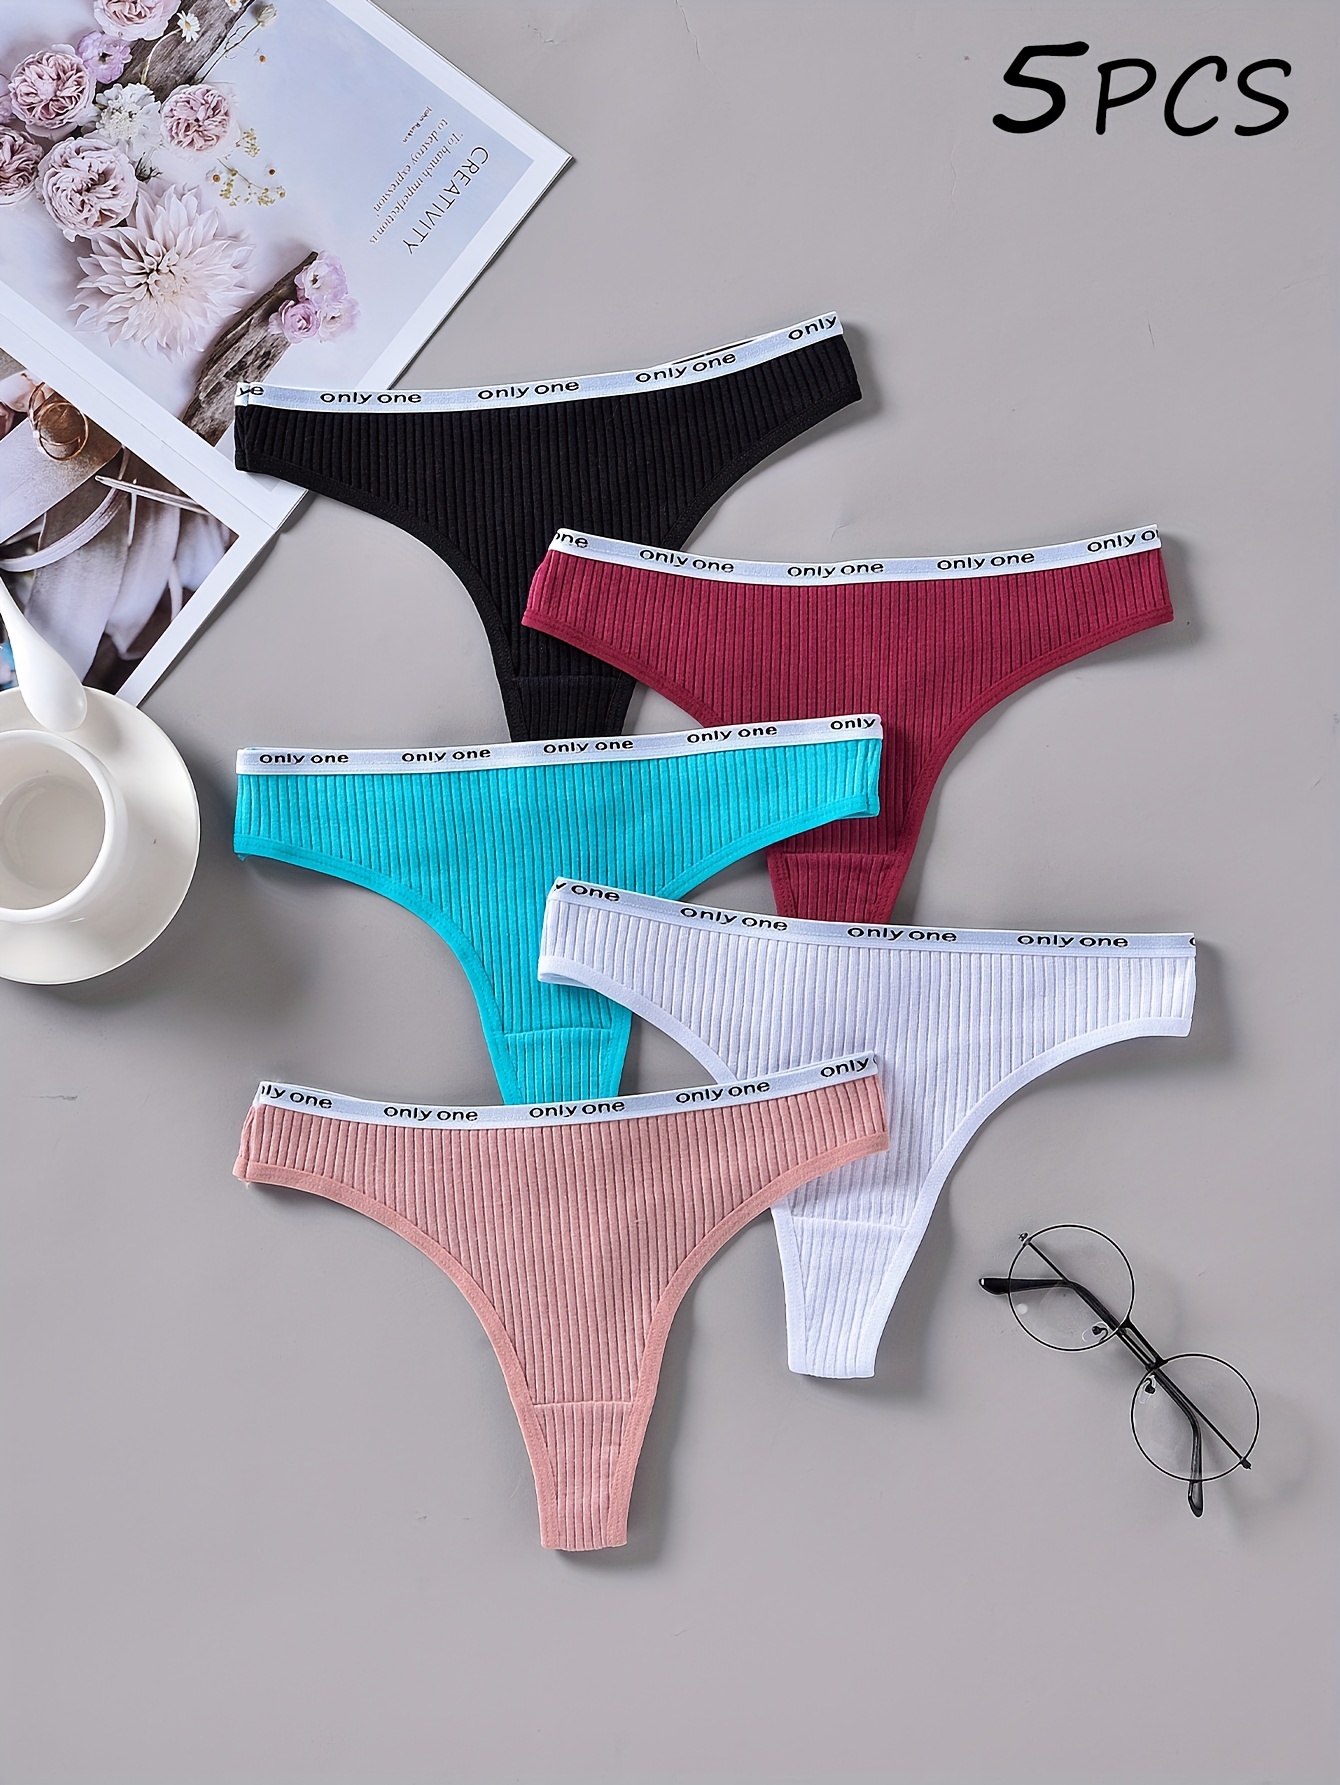 6 Pcs Seamless Sports Thongs, Comfy Low Waist Letter Print Thong Intimates  Panties, Women's Lingerie & Underwear